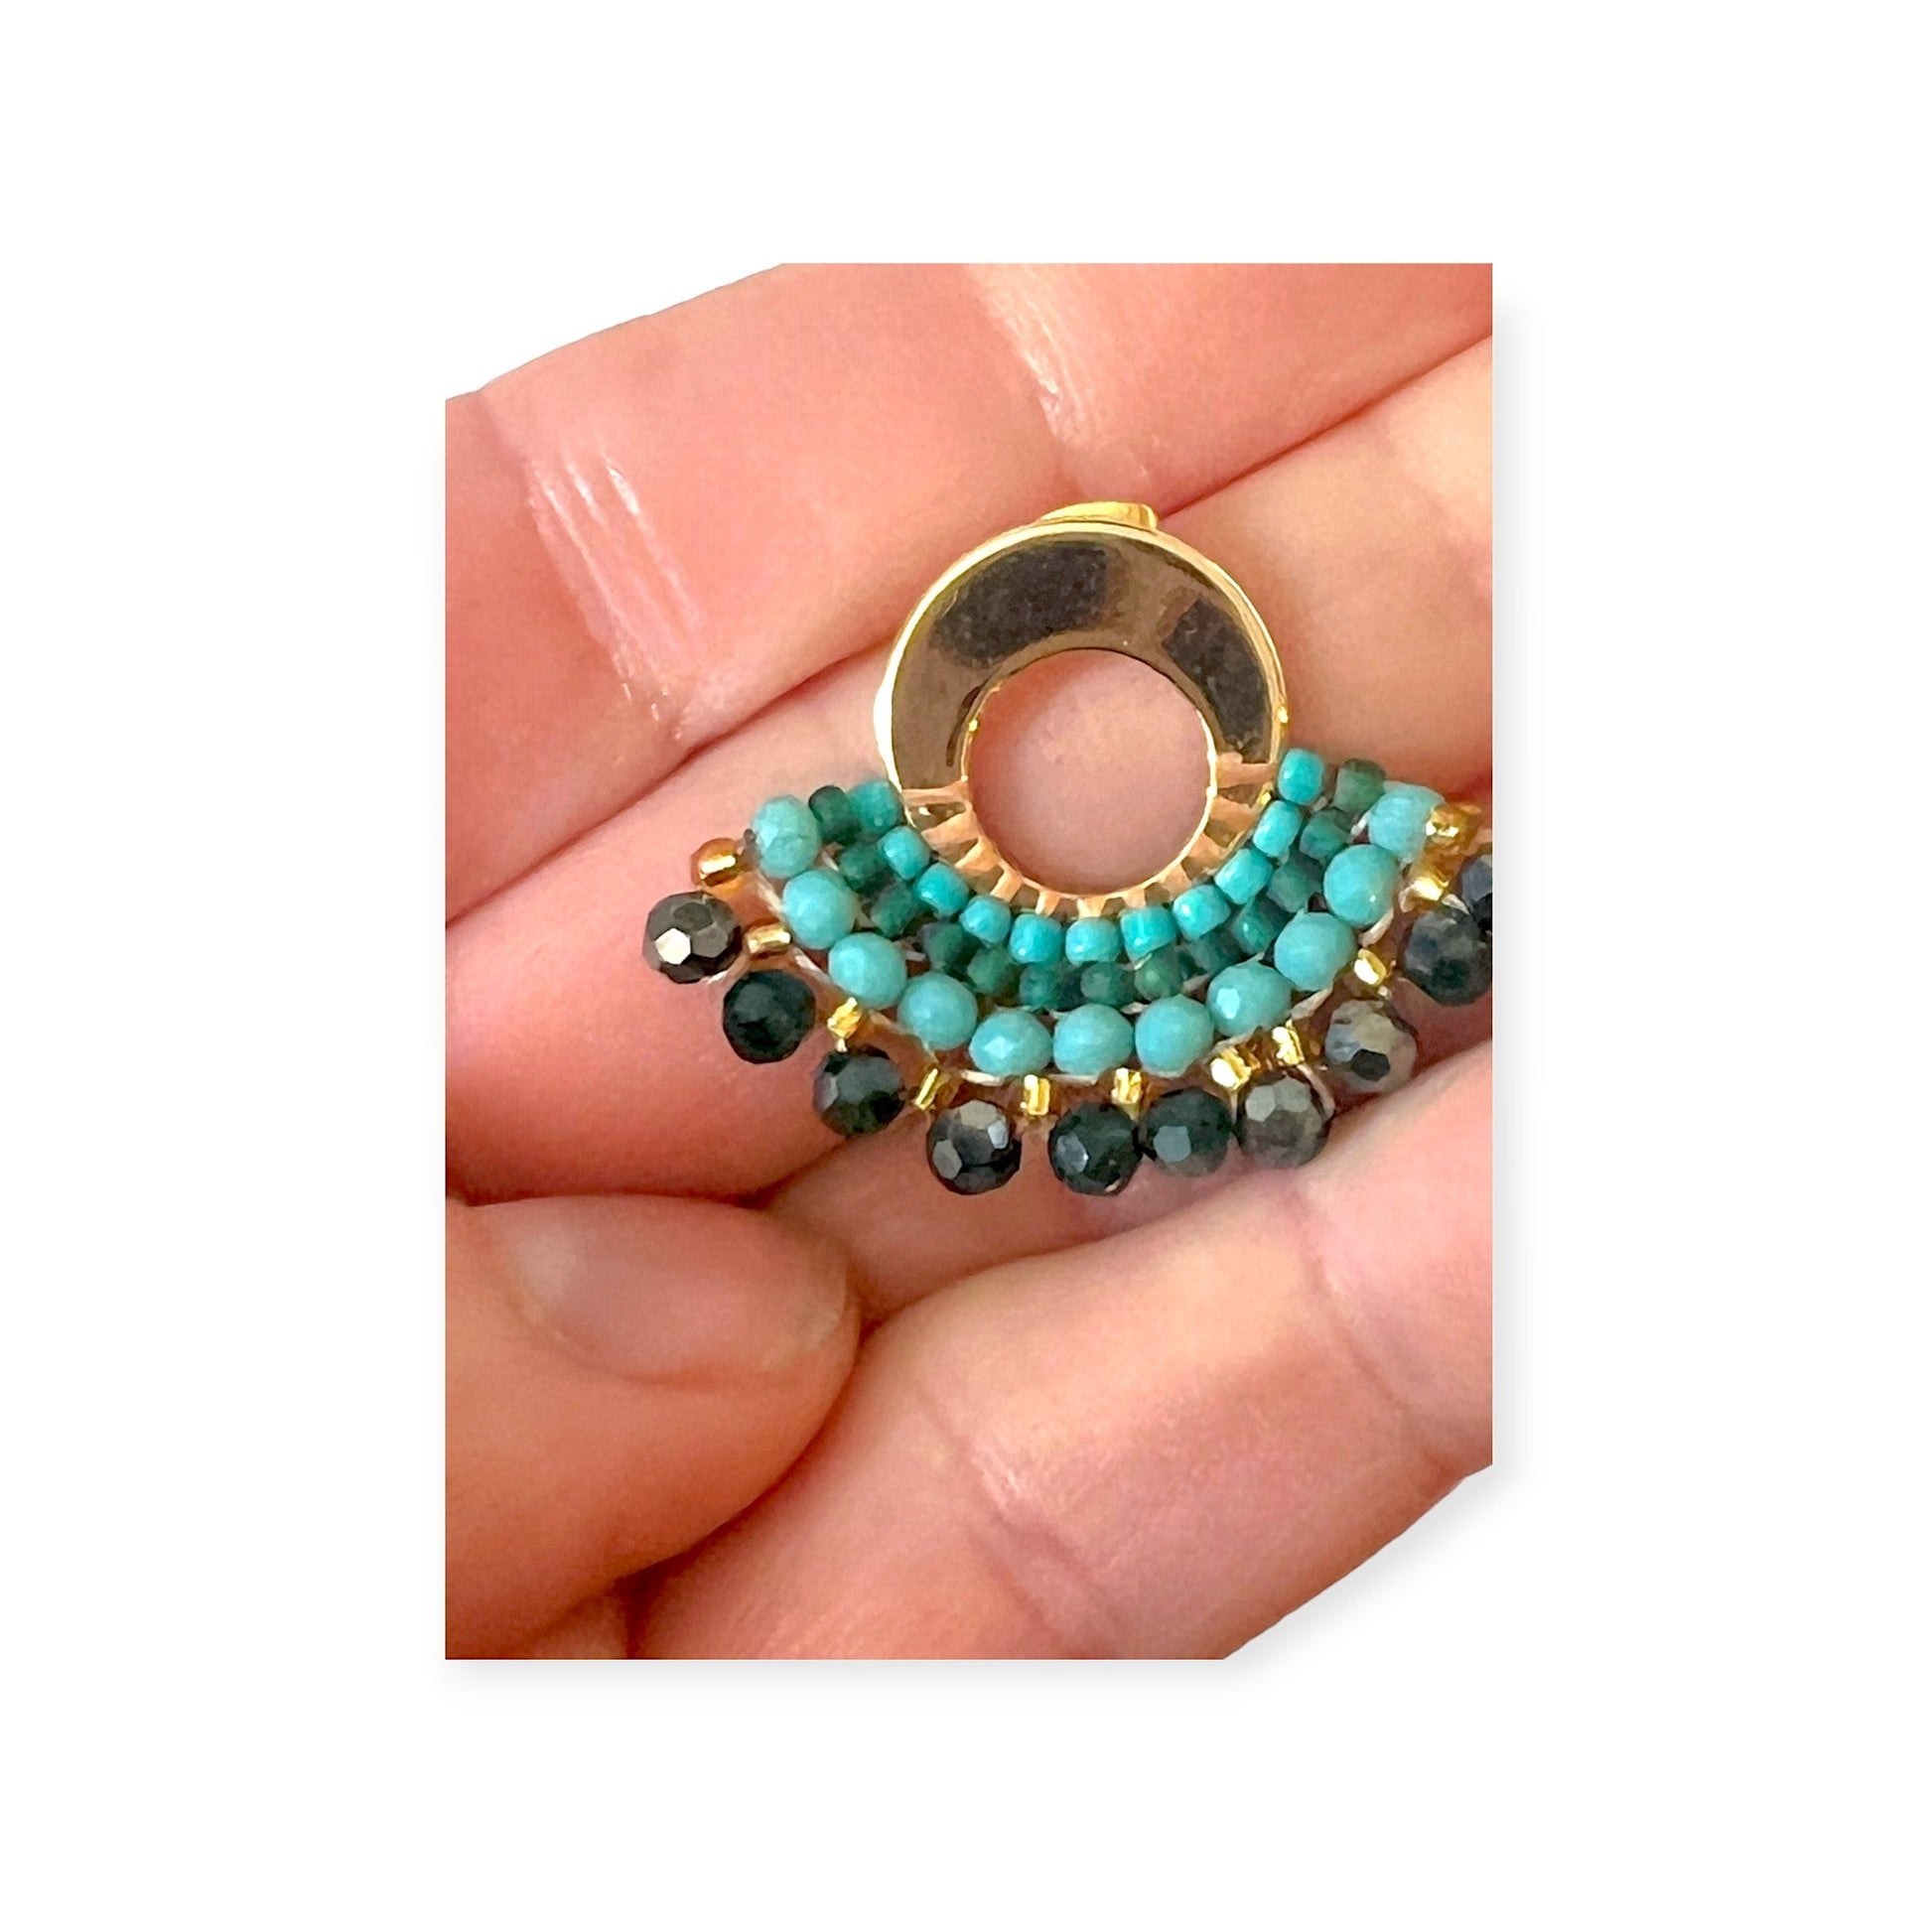 Colorful beaded fan earrings - Sundara Joon